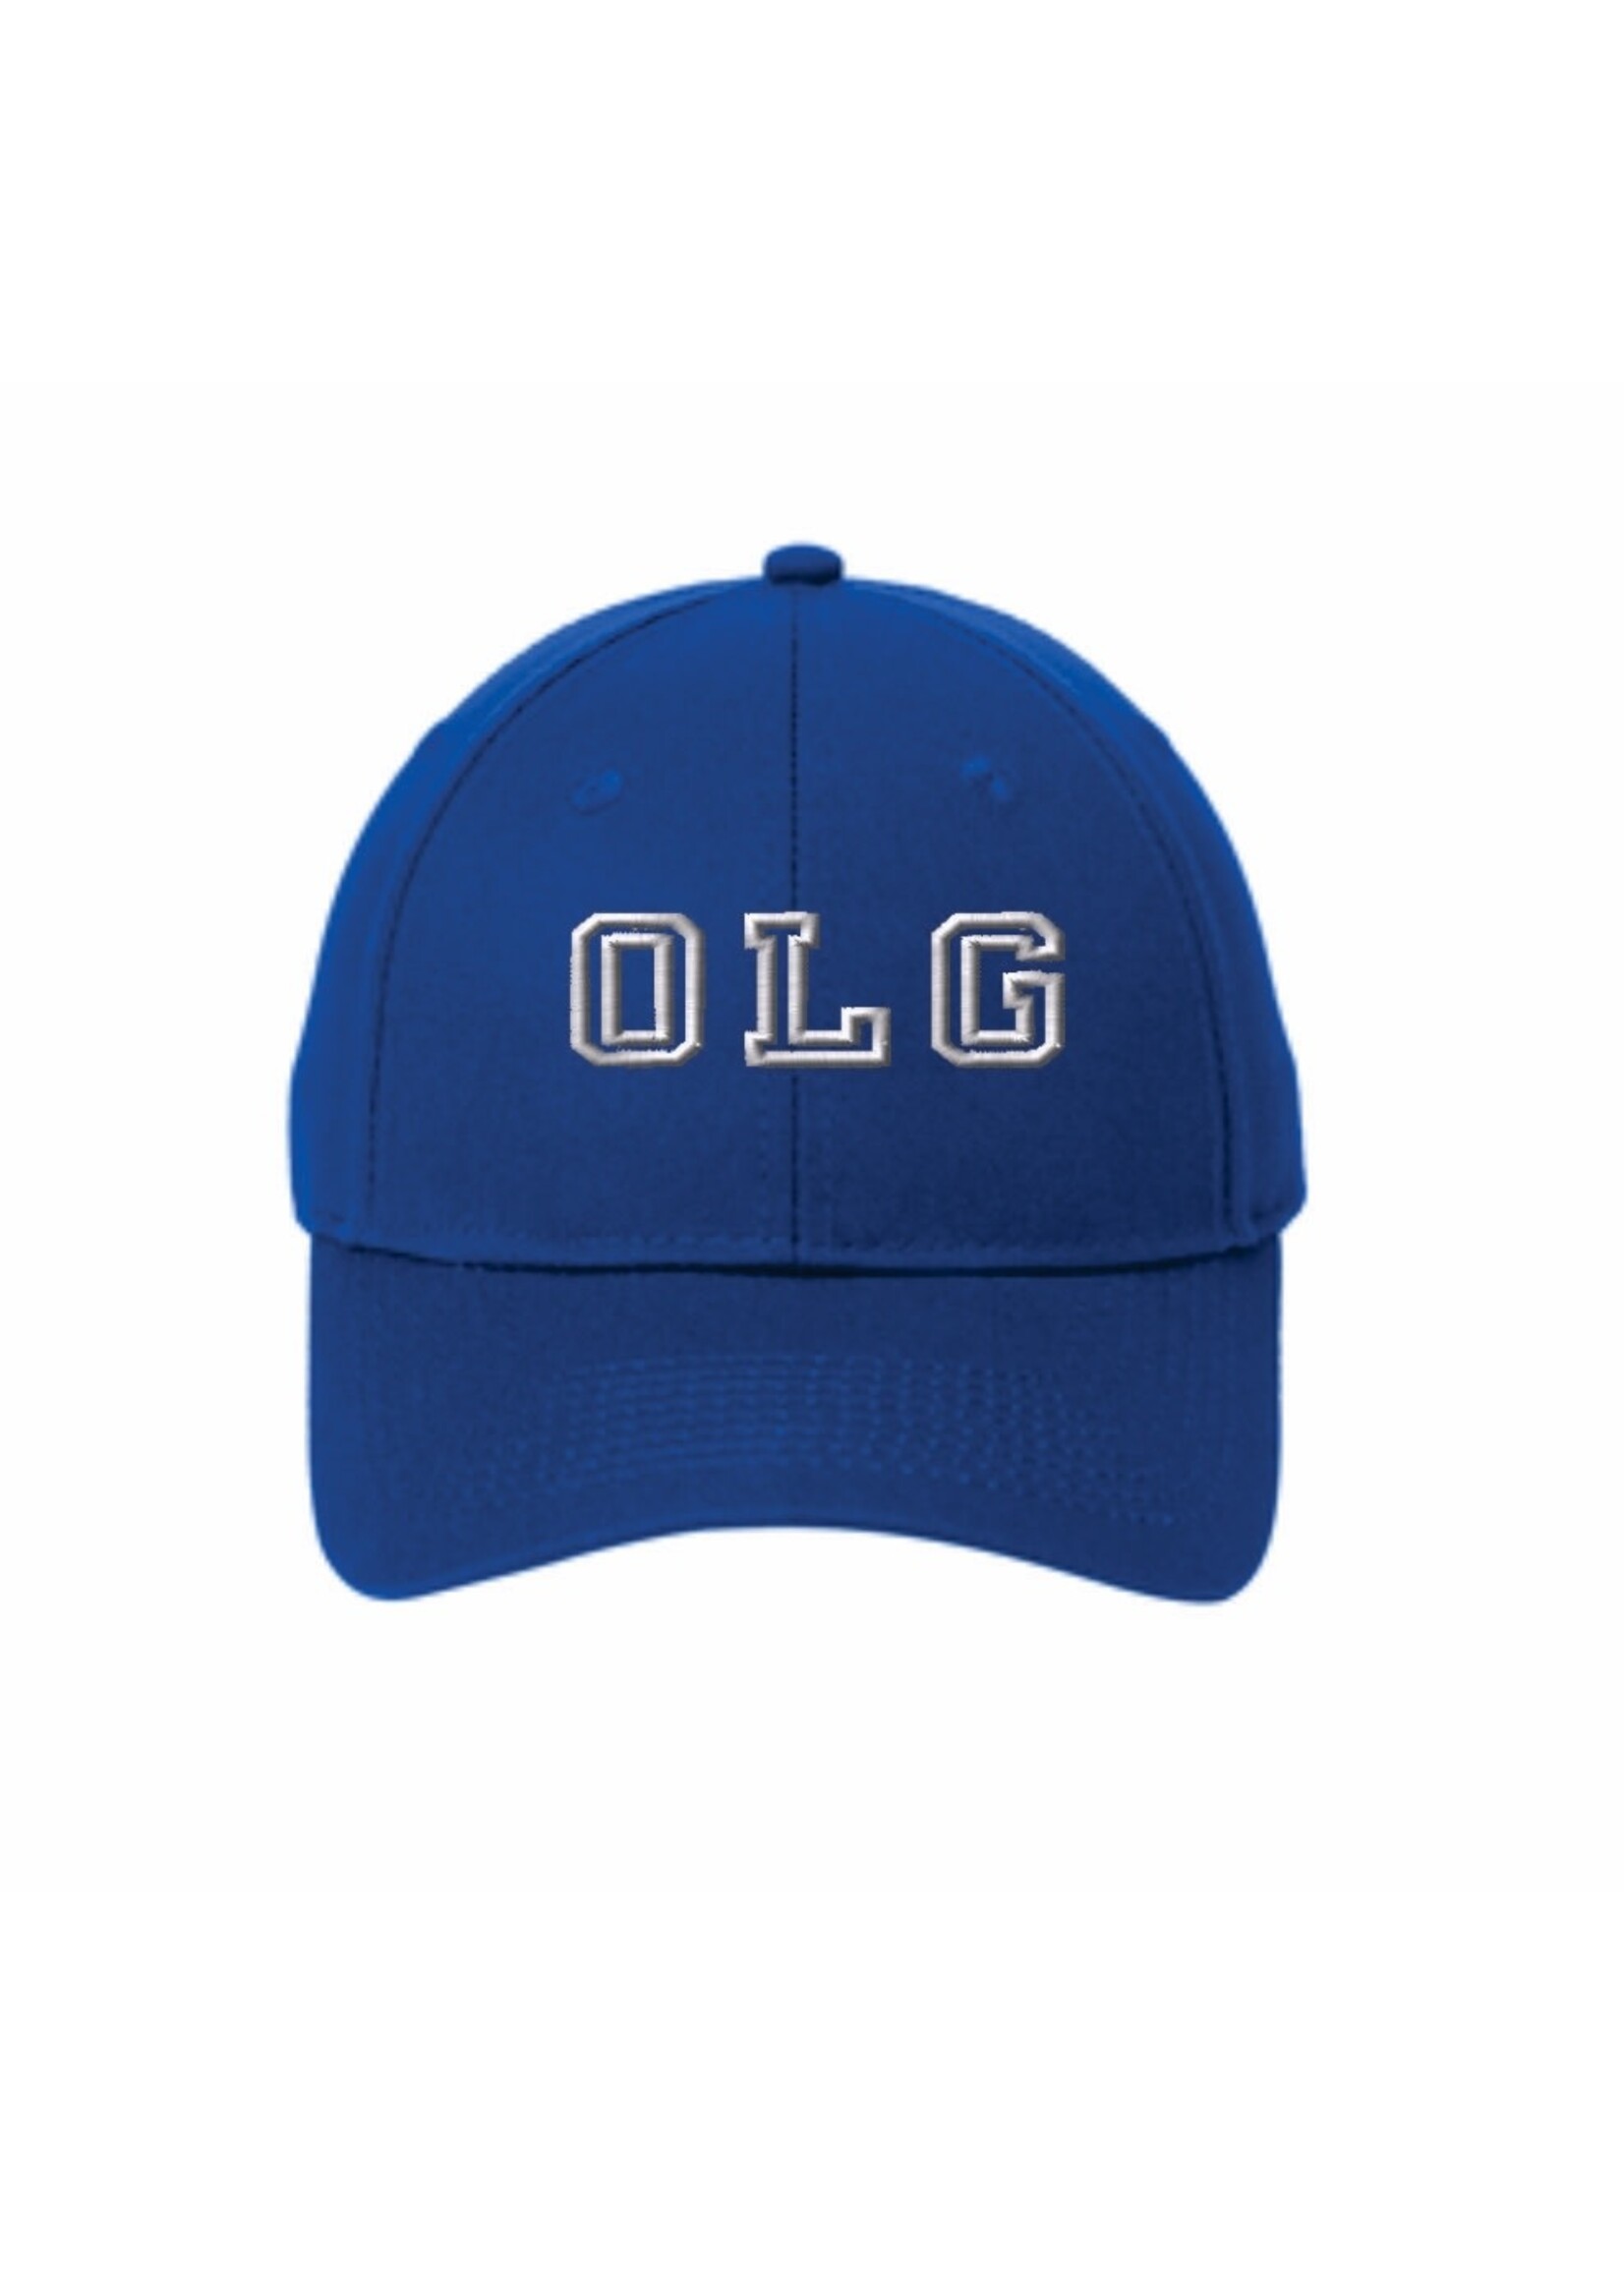 OLG Adjustable Cap with Outline Logo